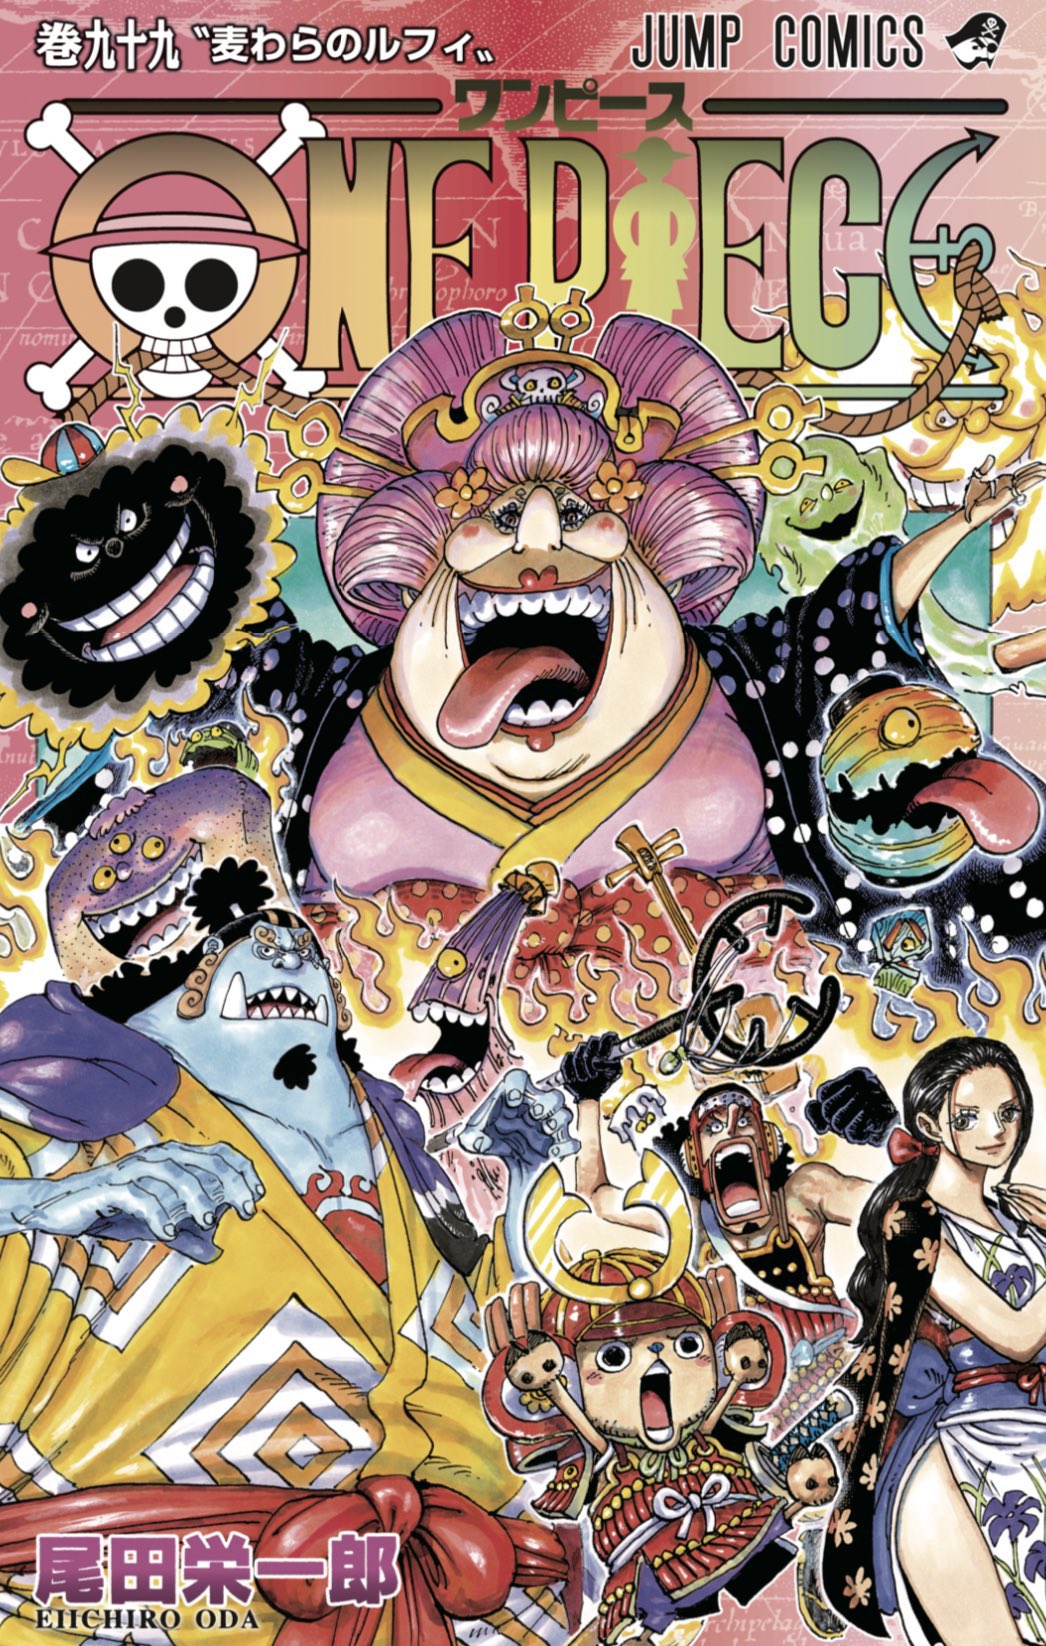 Capítulo 1061, One Piece Wiki